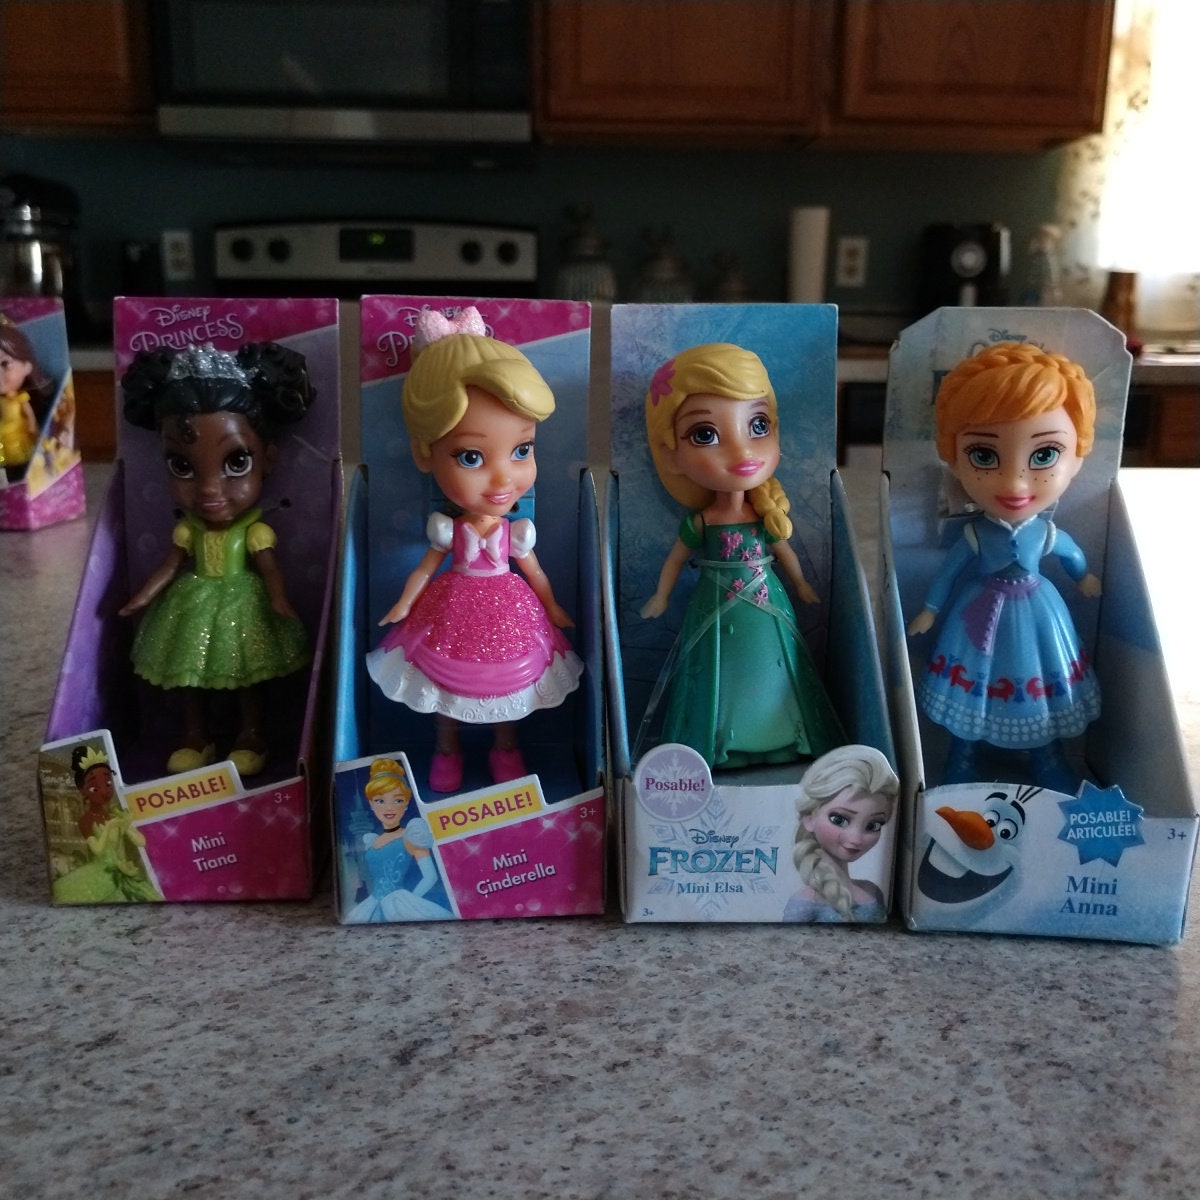 Disney Princesses Tiana Large Soft Plush Toy Doll 28cm Princess